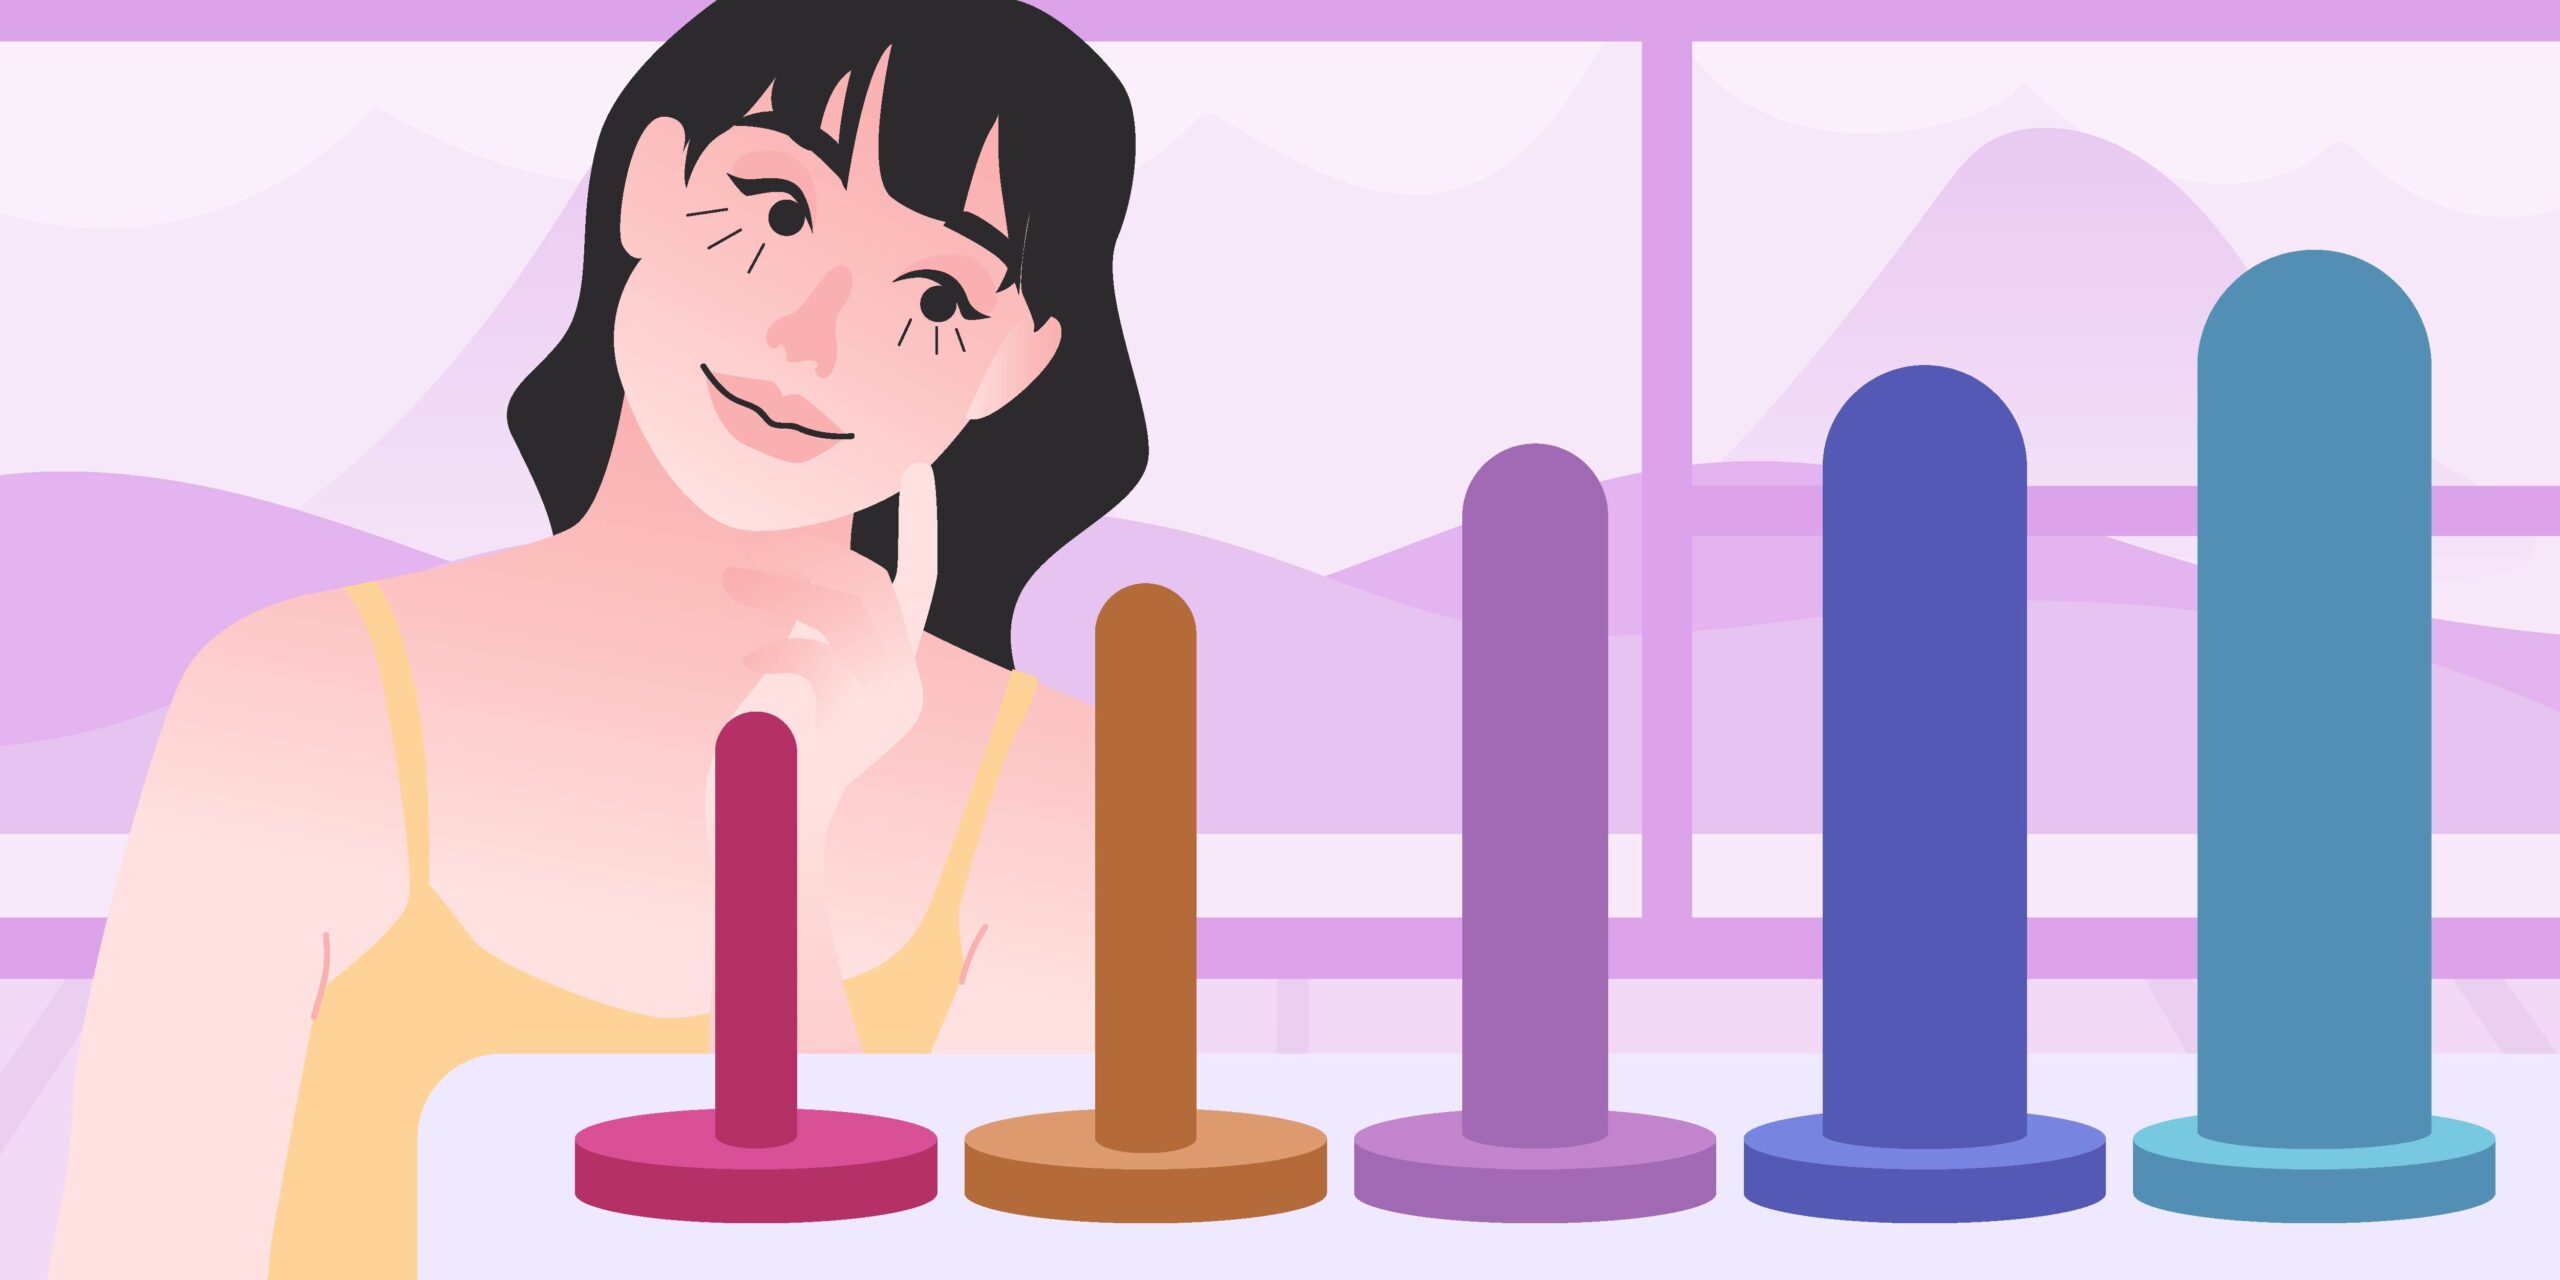 How To Use A Vaginal Dilator: 6 Steps Everyone Should Do